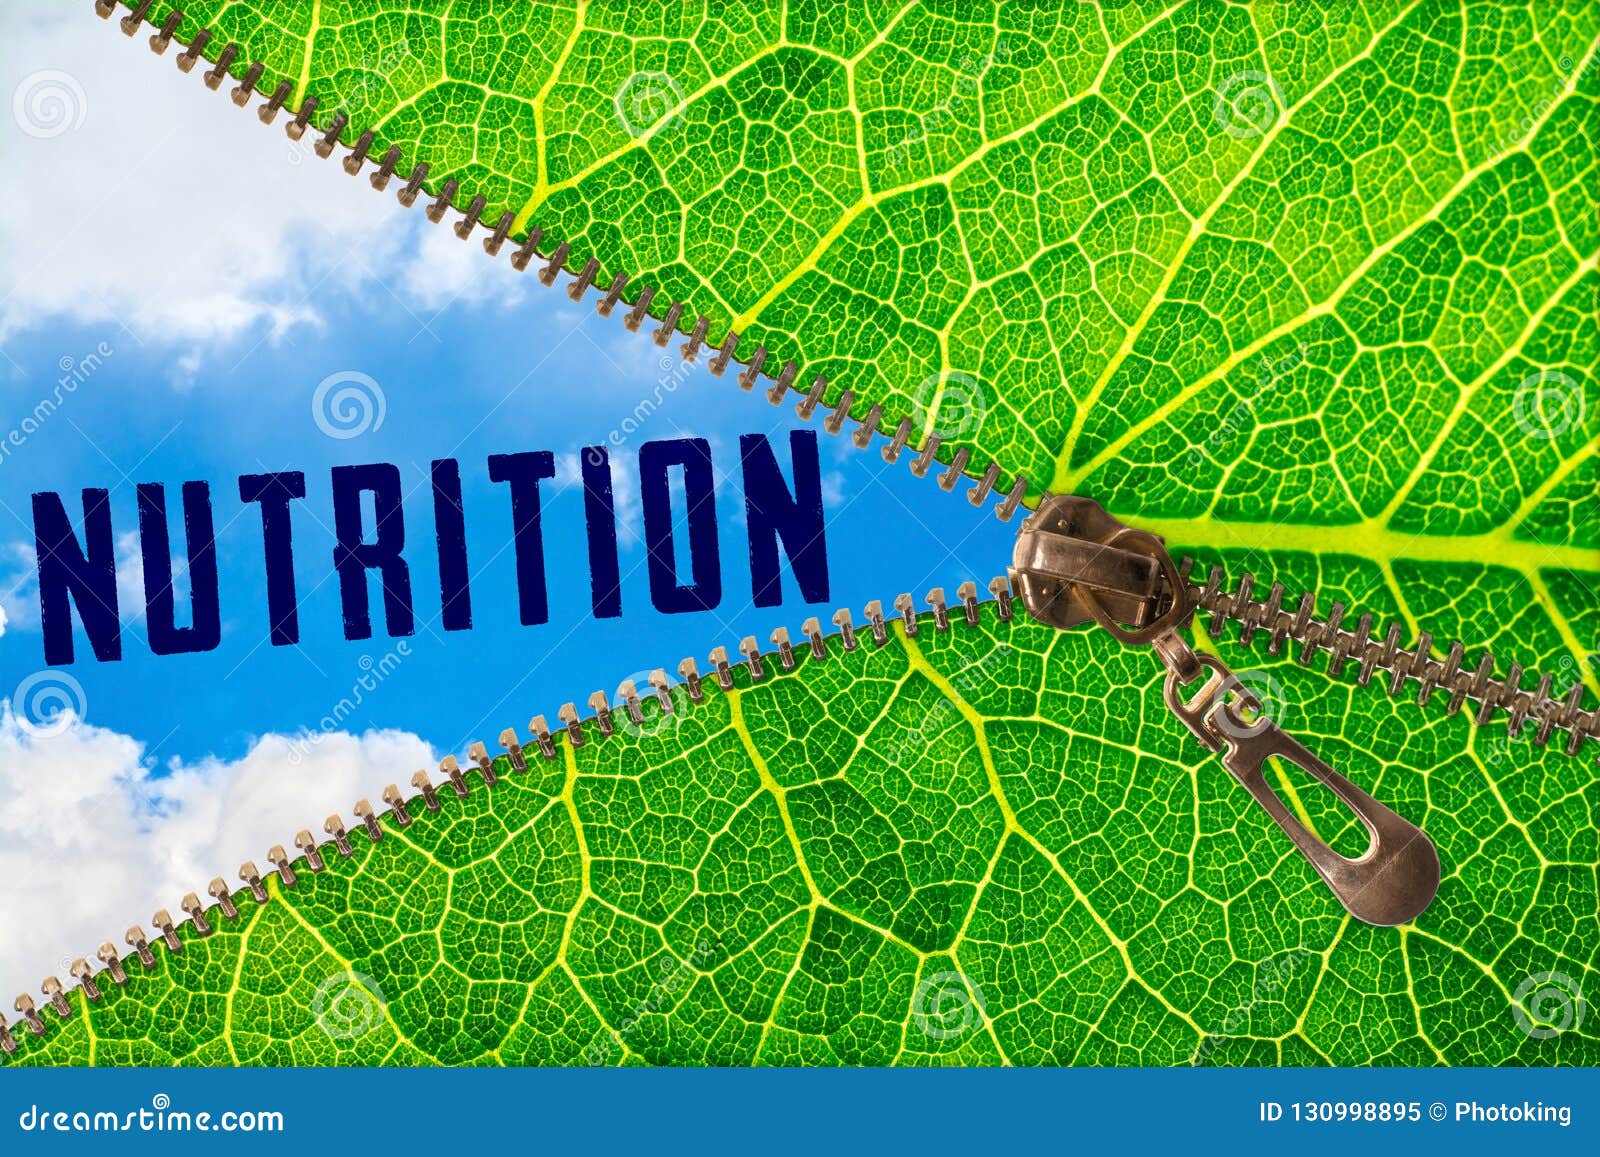 nutrition word under zipper leaf